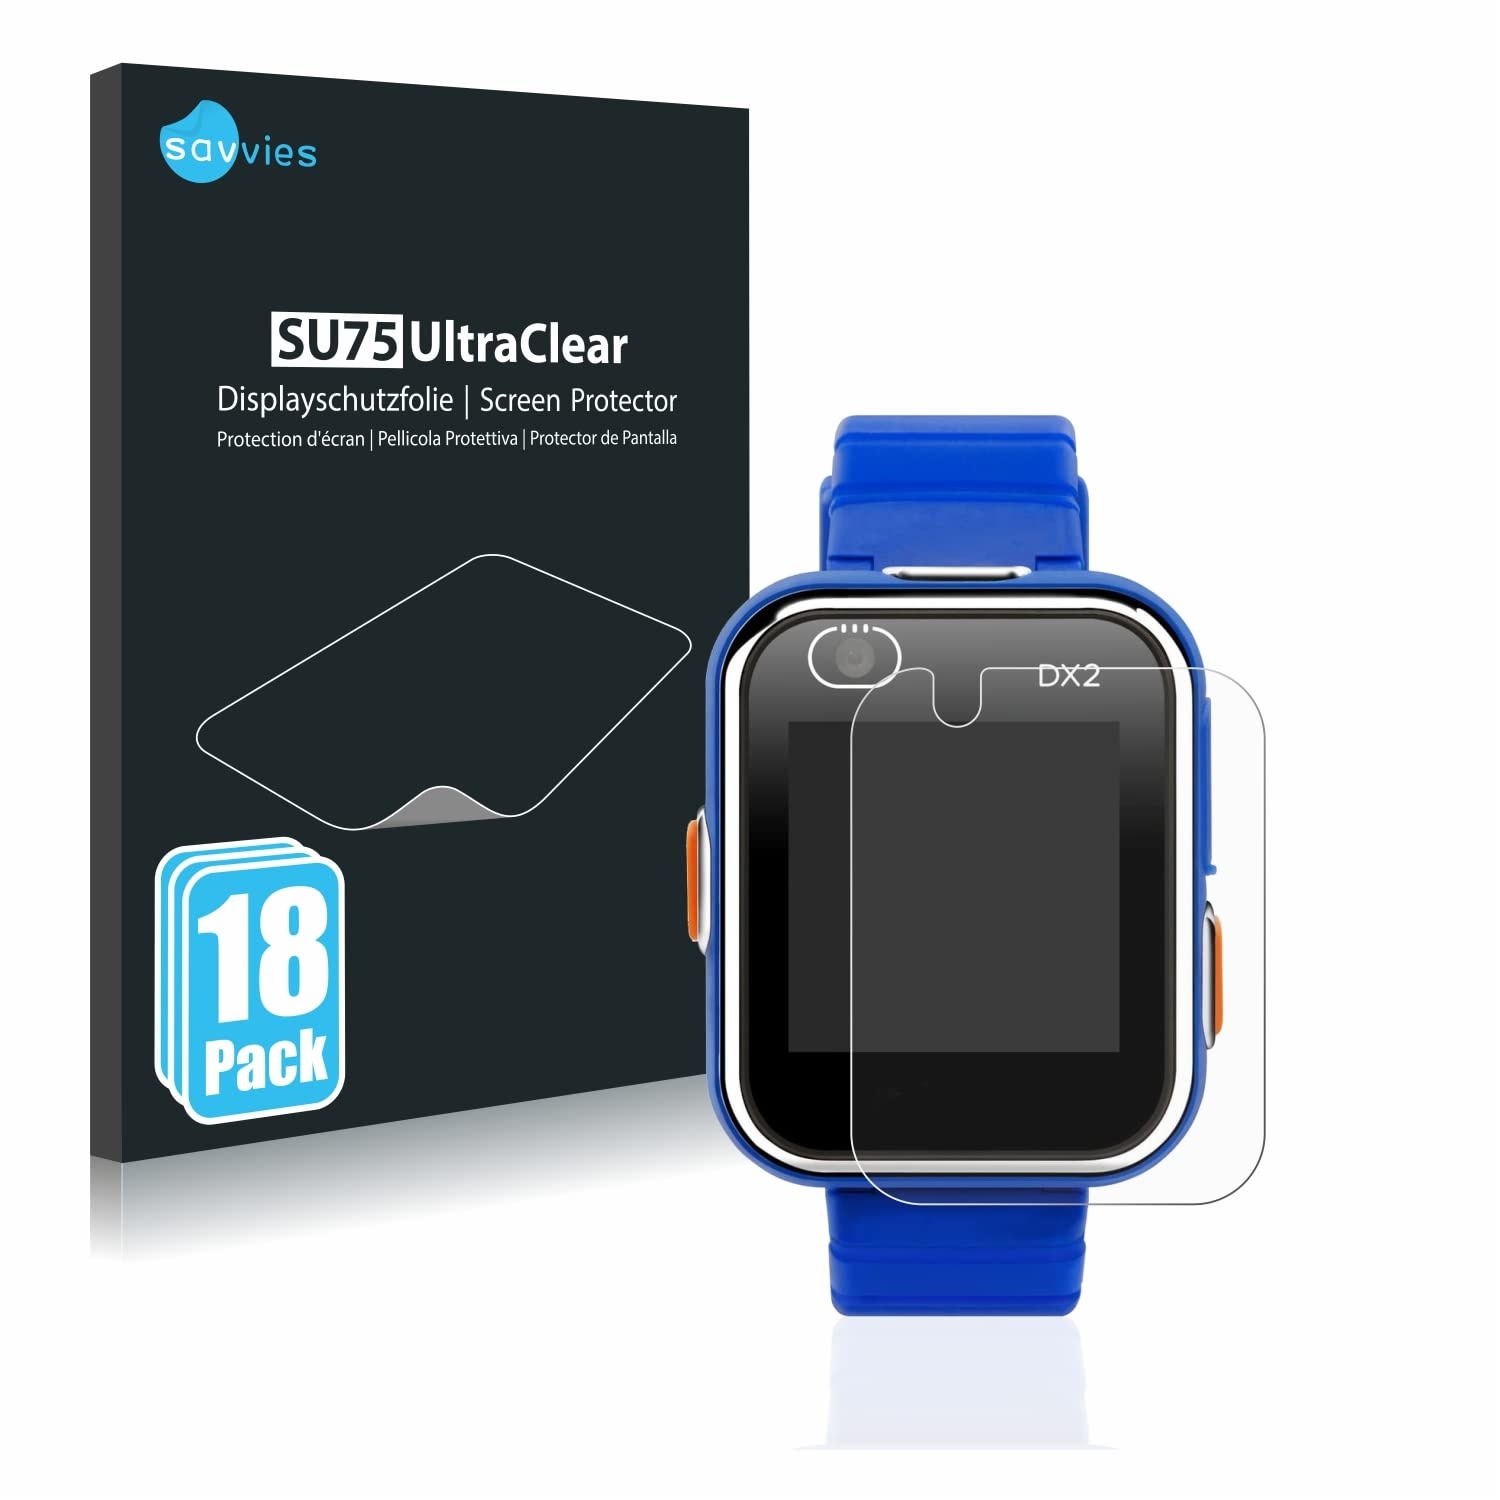 Savvies 18 Stück Schutzfolie für Vtech Kidizoom Smart Watch DX2 Displayschutz-Folie Ultra-Transparent